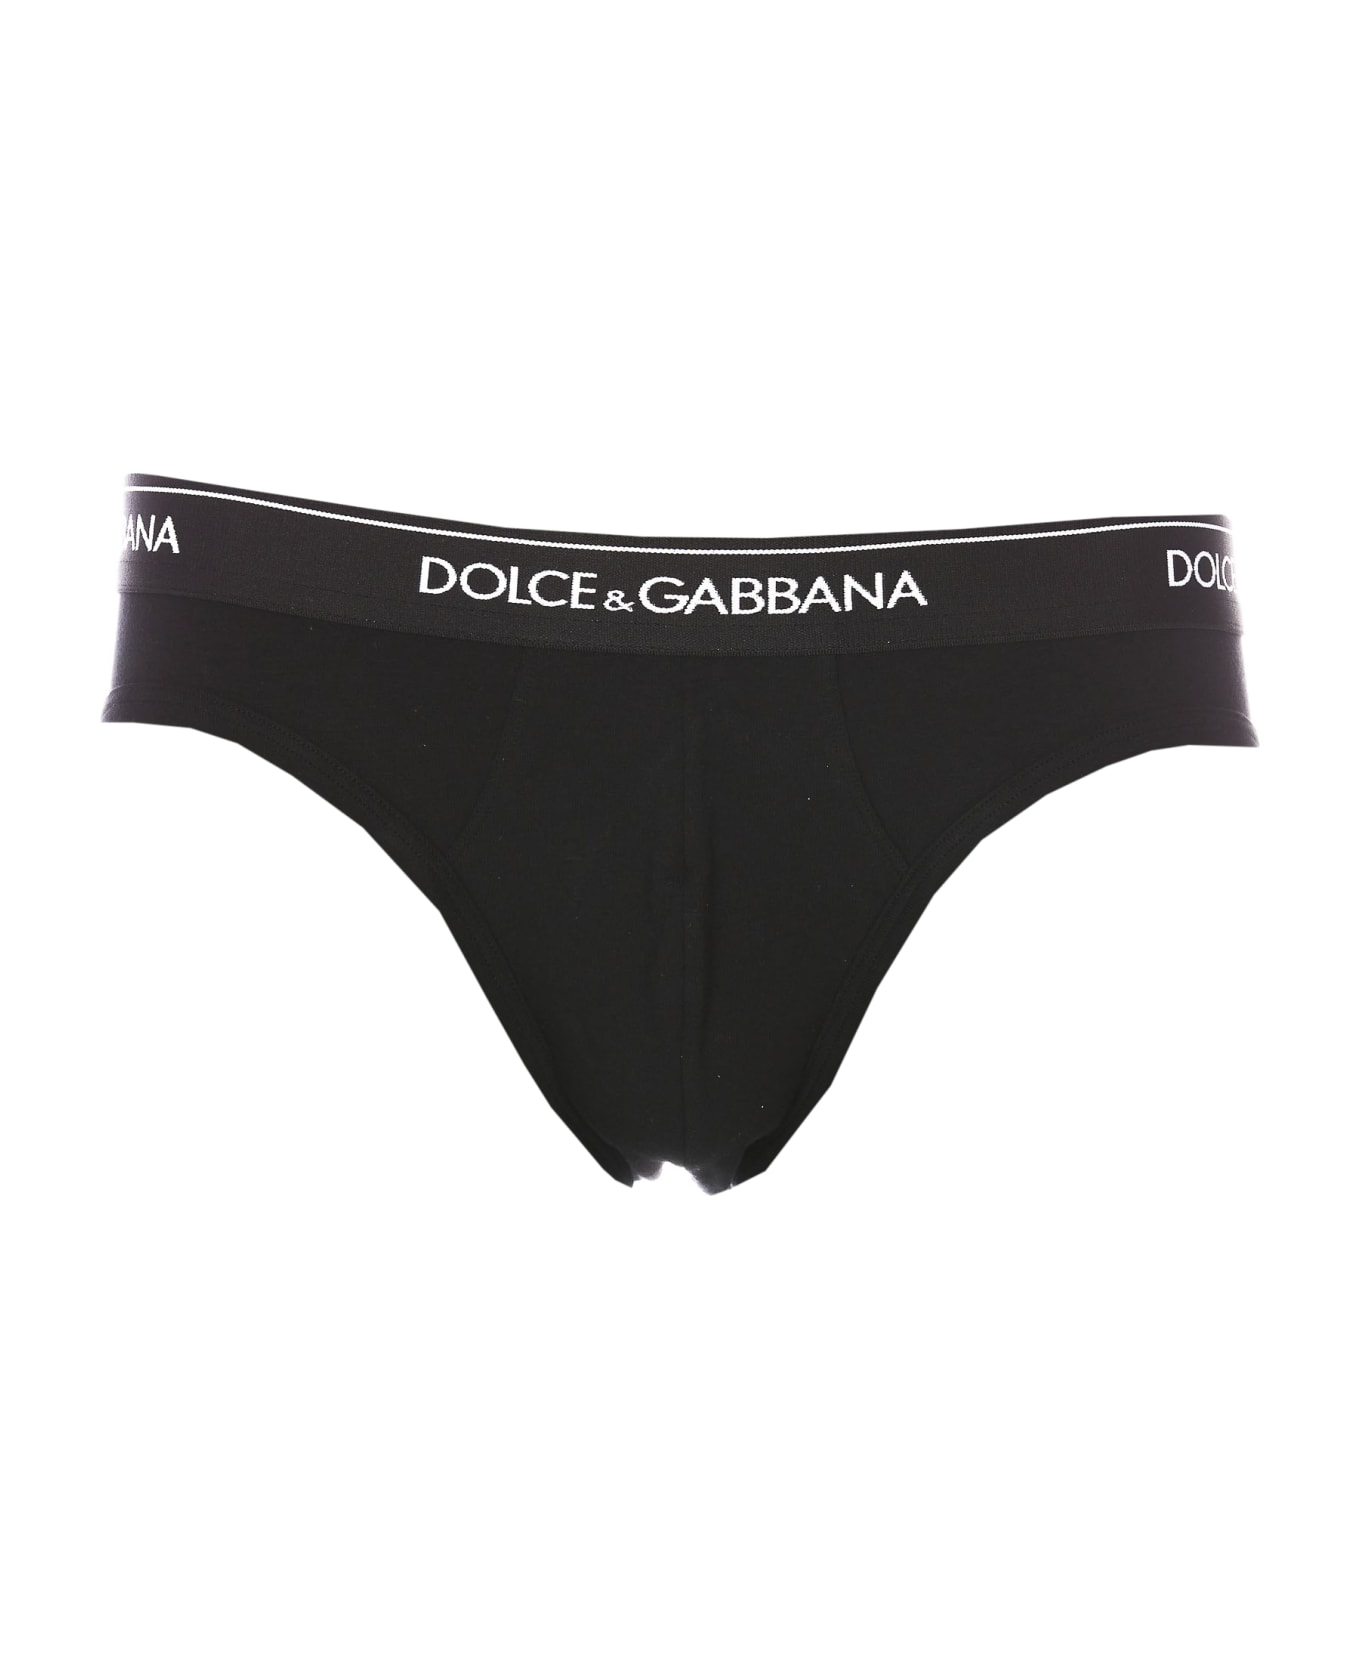 Dolce & Gabbana Logo Bipack Brief - BLACK ショーツ